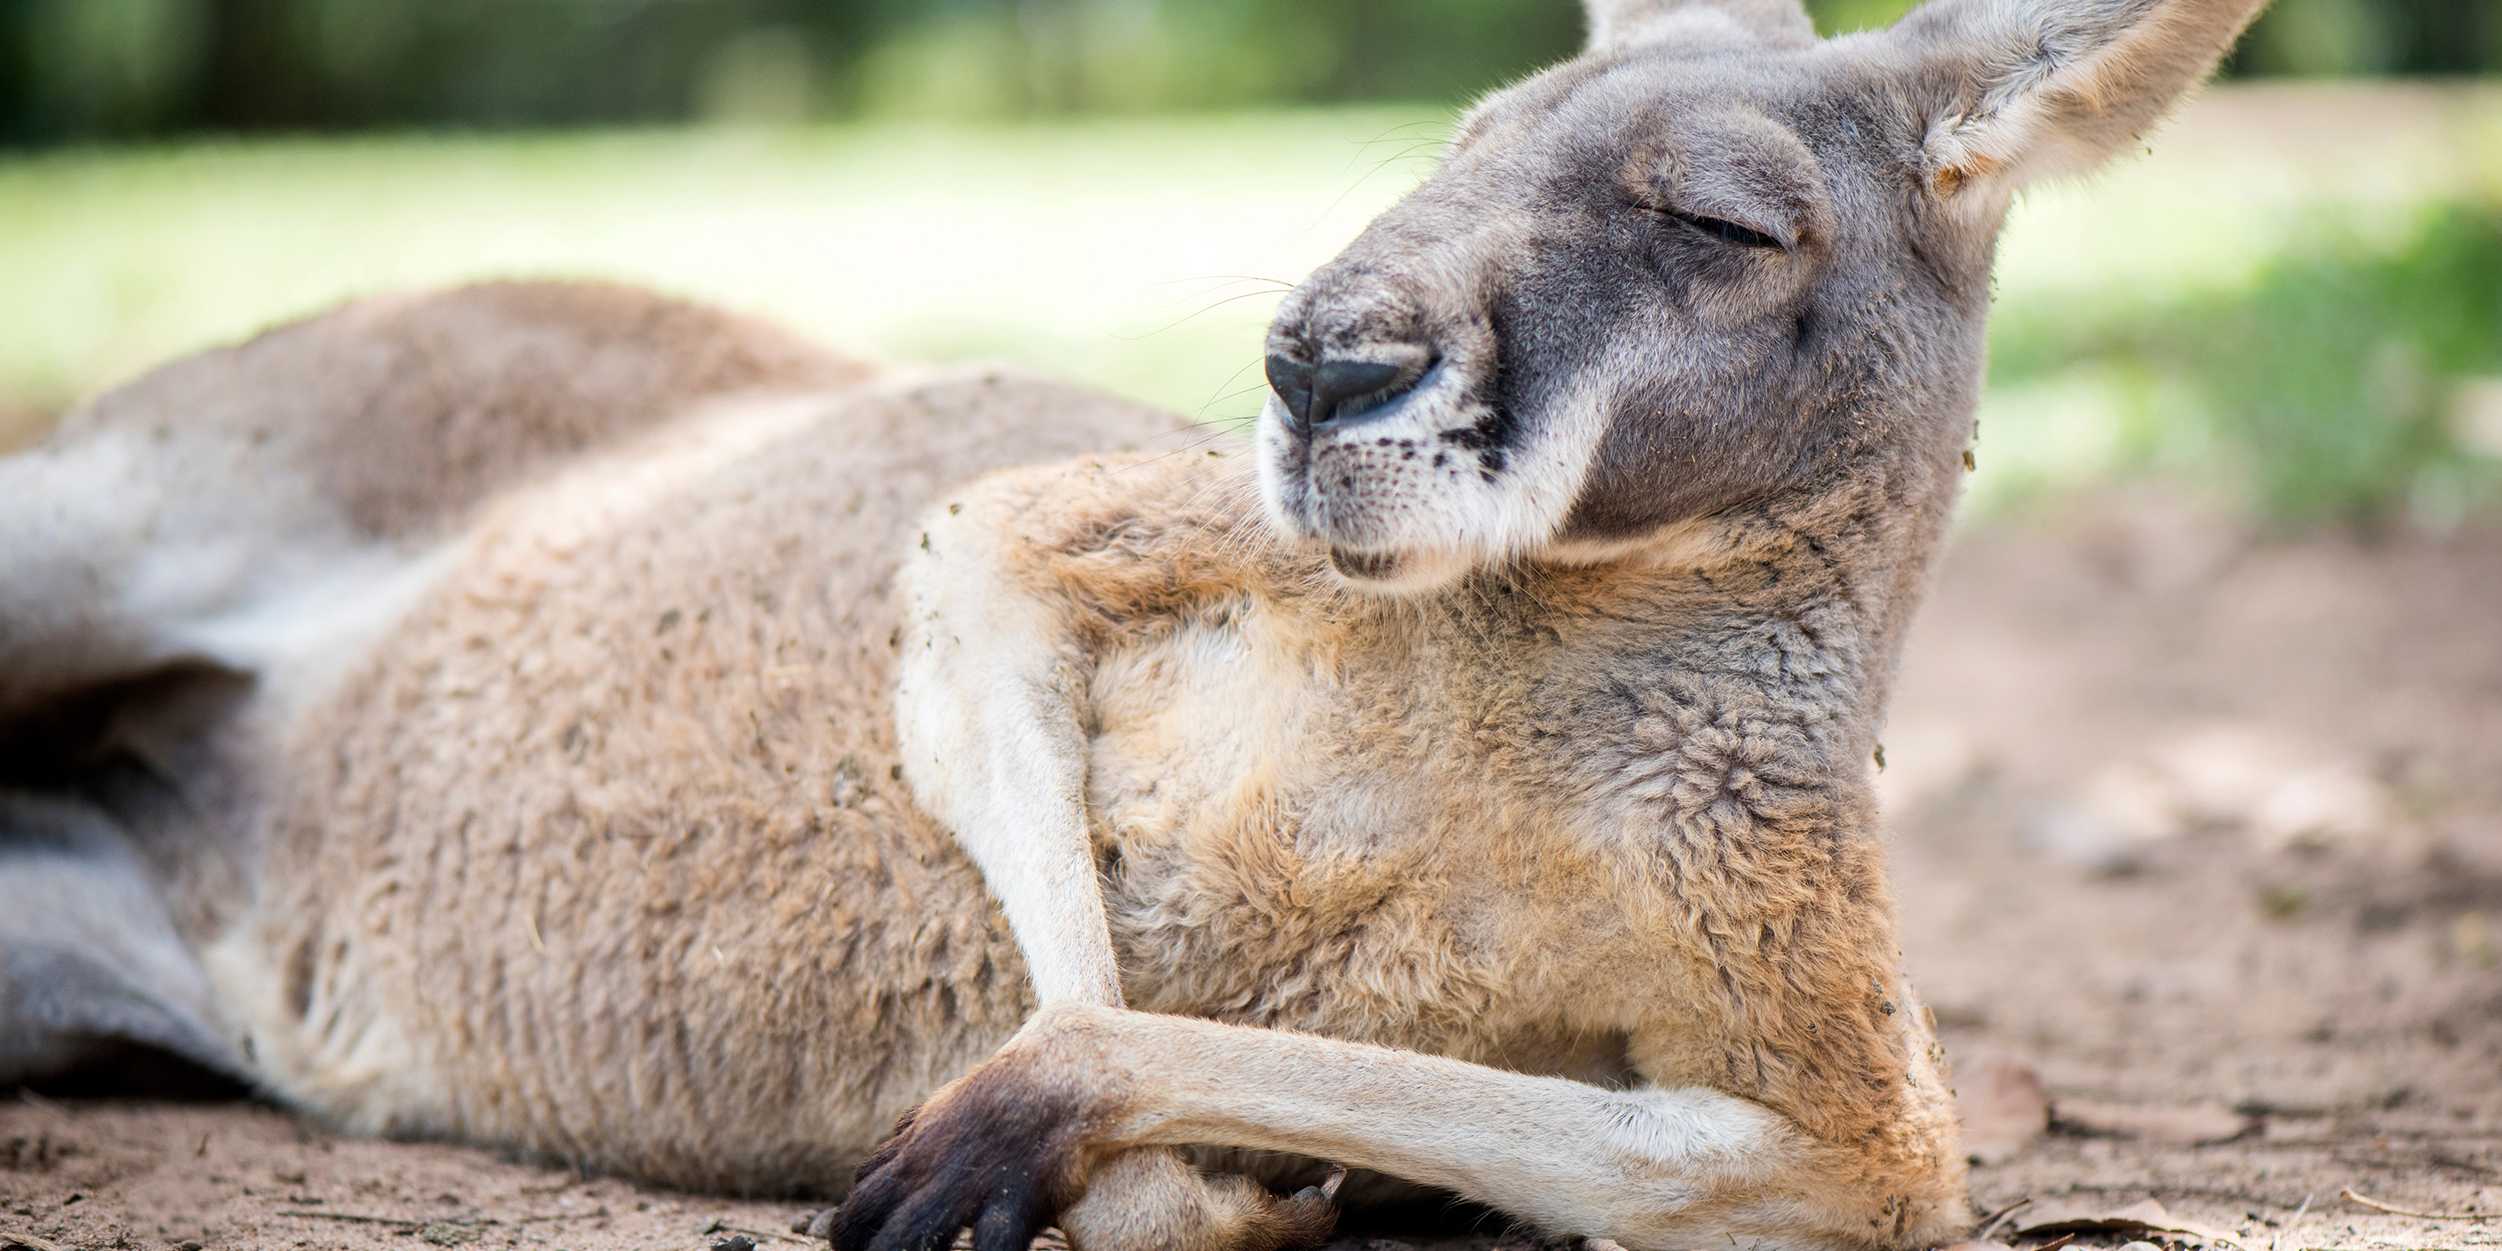 Kangaroo lying in the sun with half closed eyes